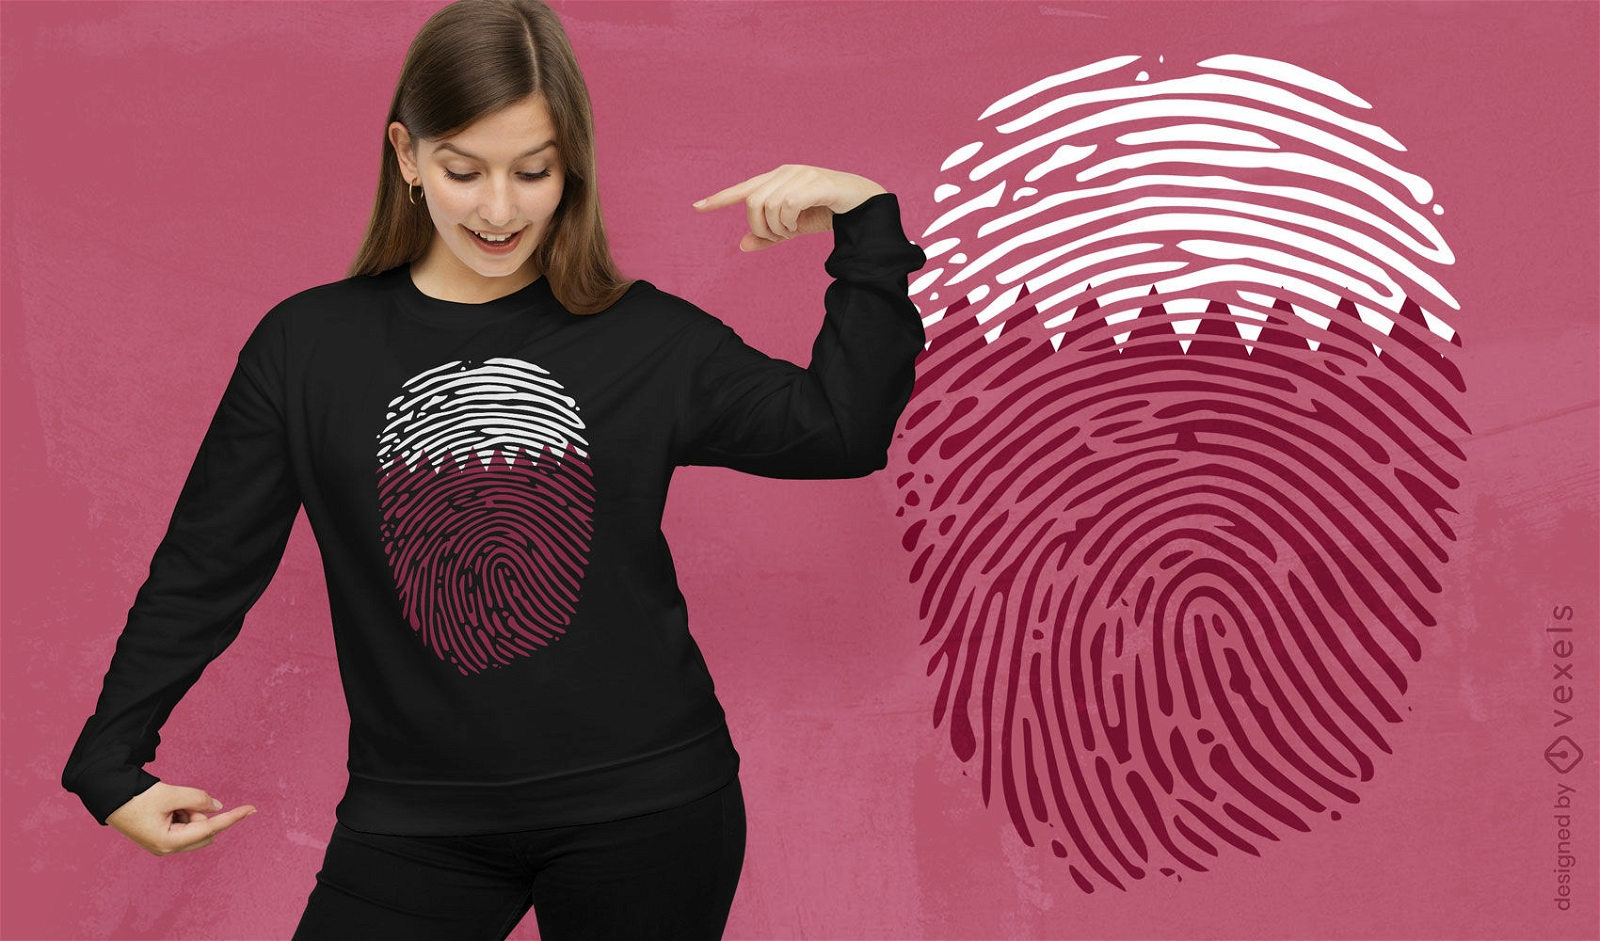 Qatar fingerprint flag t-shirt design